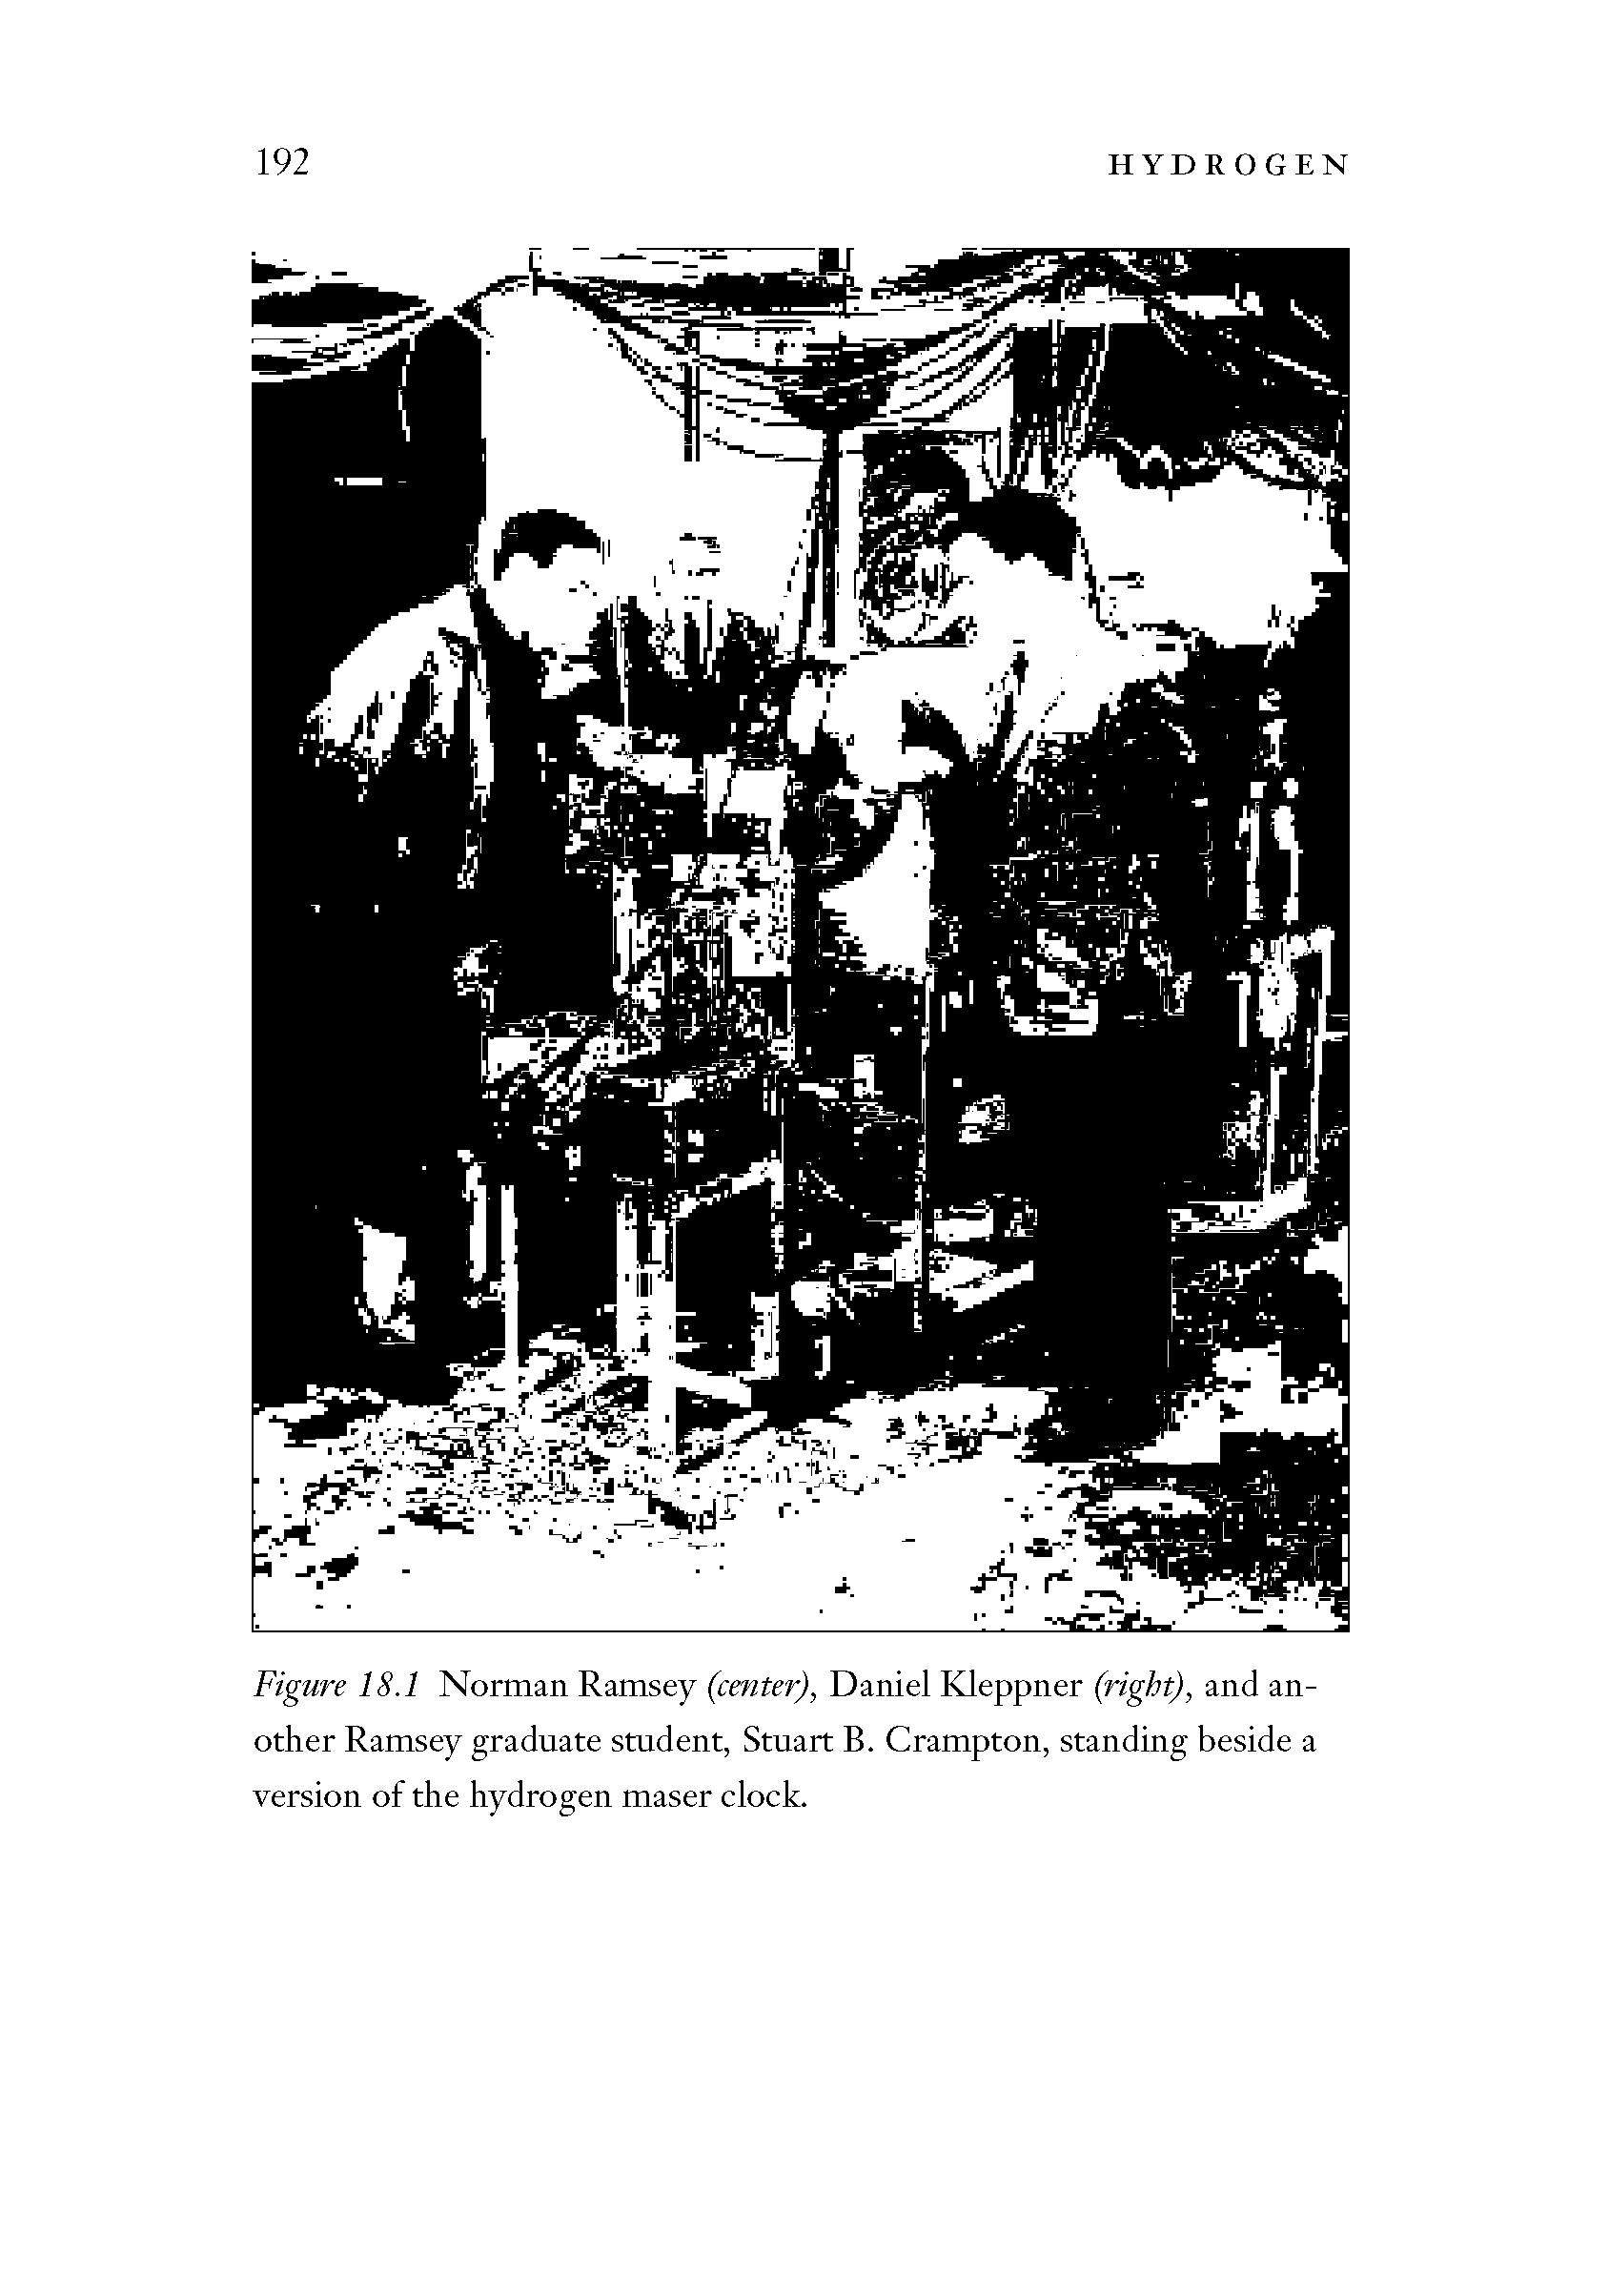 Figure 18.1 Norman Ramsey (center), Daniel Kleppner (right), and another Ramsey graduate student, Stuart B. Crampton, standing beside a version of the hydrogen maser clock.